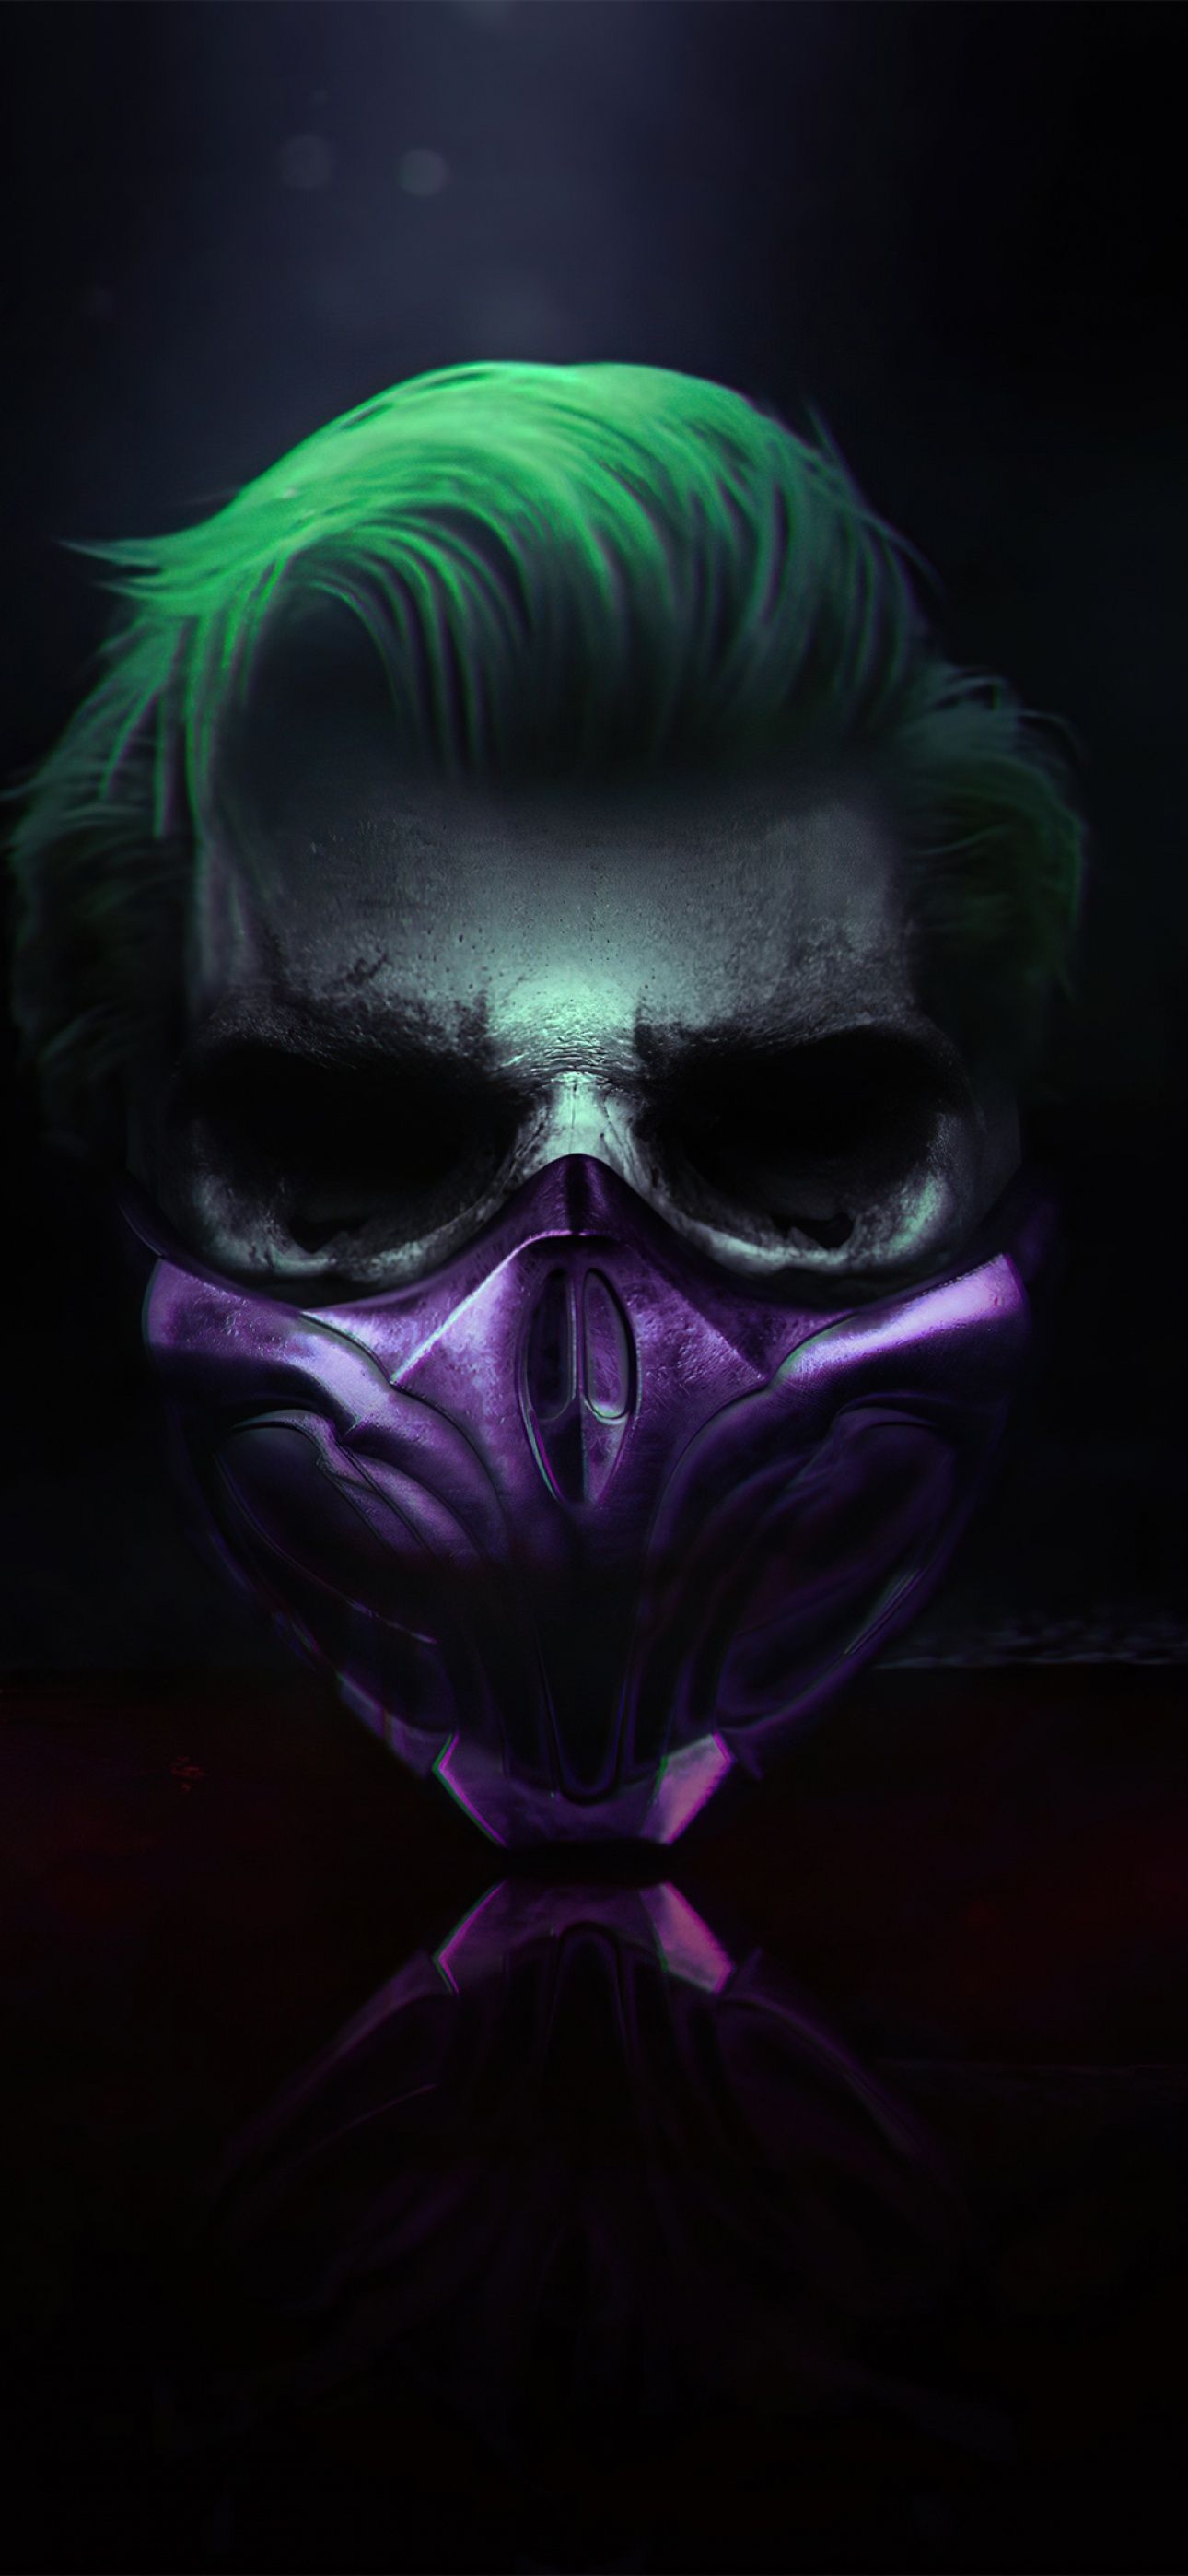  Joker Hintergrundbild 1290x2796. Joker Wallpaper 4K, Mask, Cyberpunk, Dark background